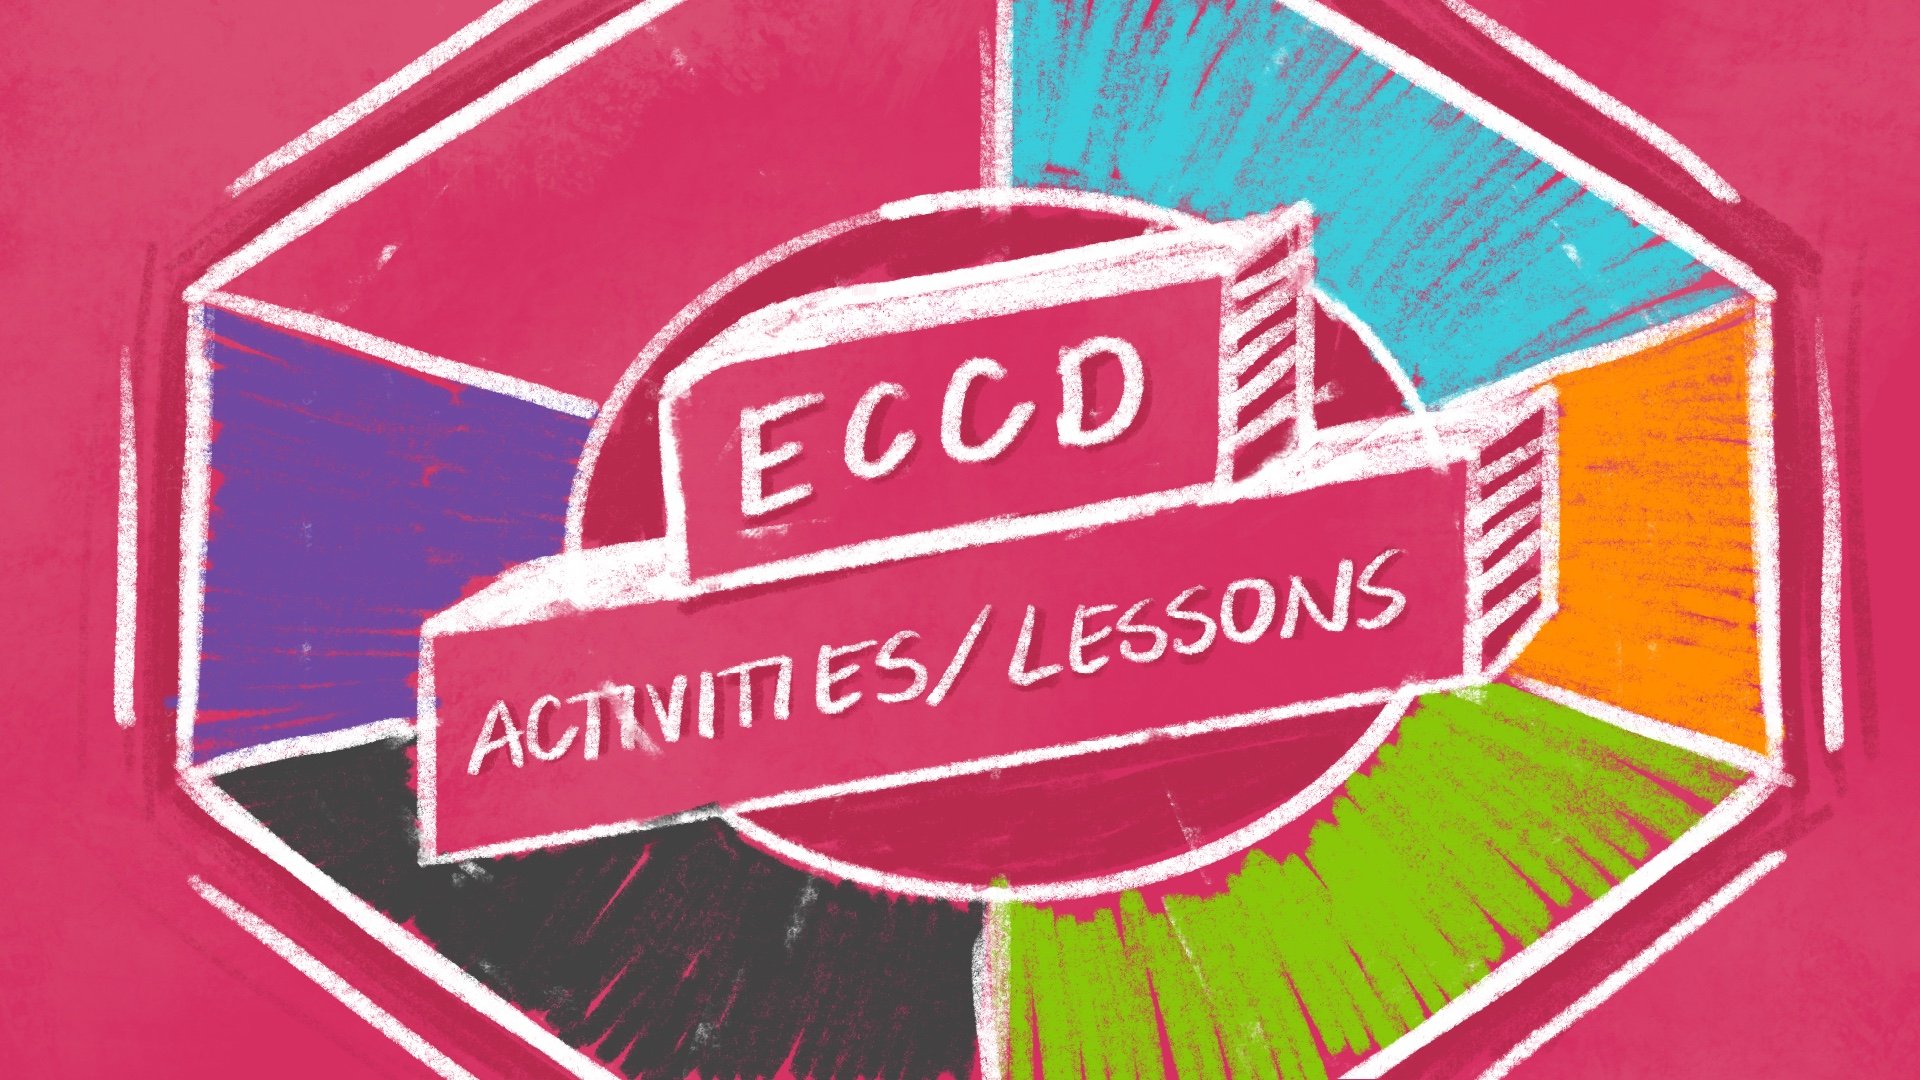 ECCD Activities+Lessons.jpeg